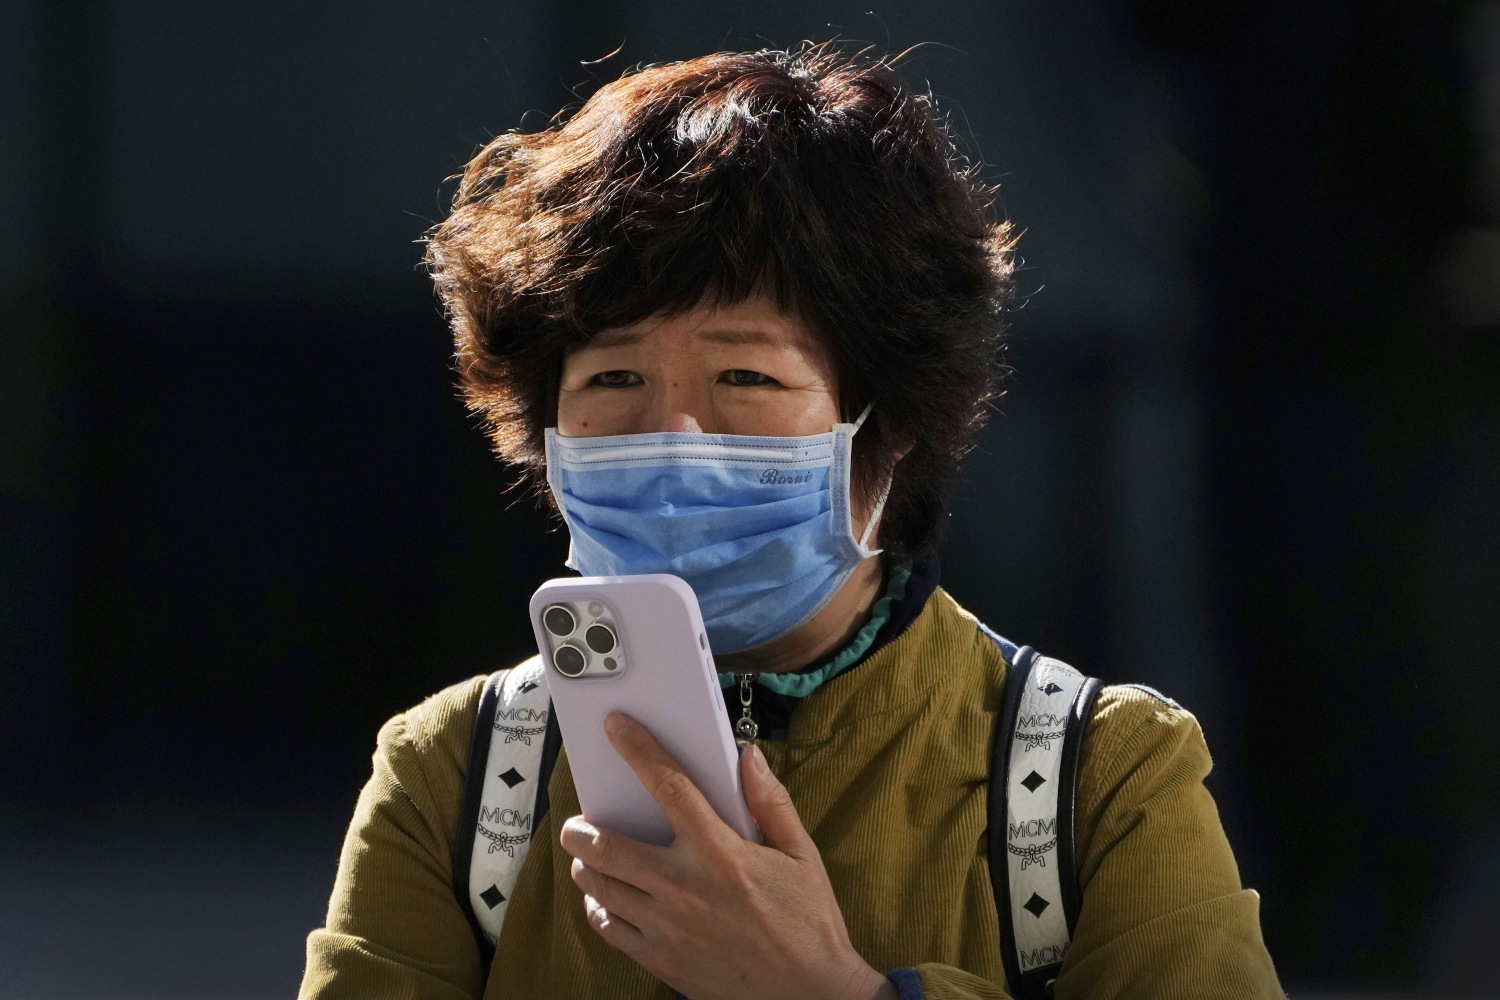 Apple's iOS 13.5 Update Addresses iPhone Coronavirus Gripes—Including Mask  Issues - WSJ